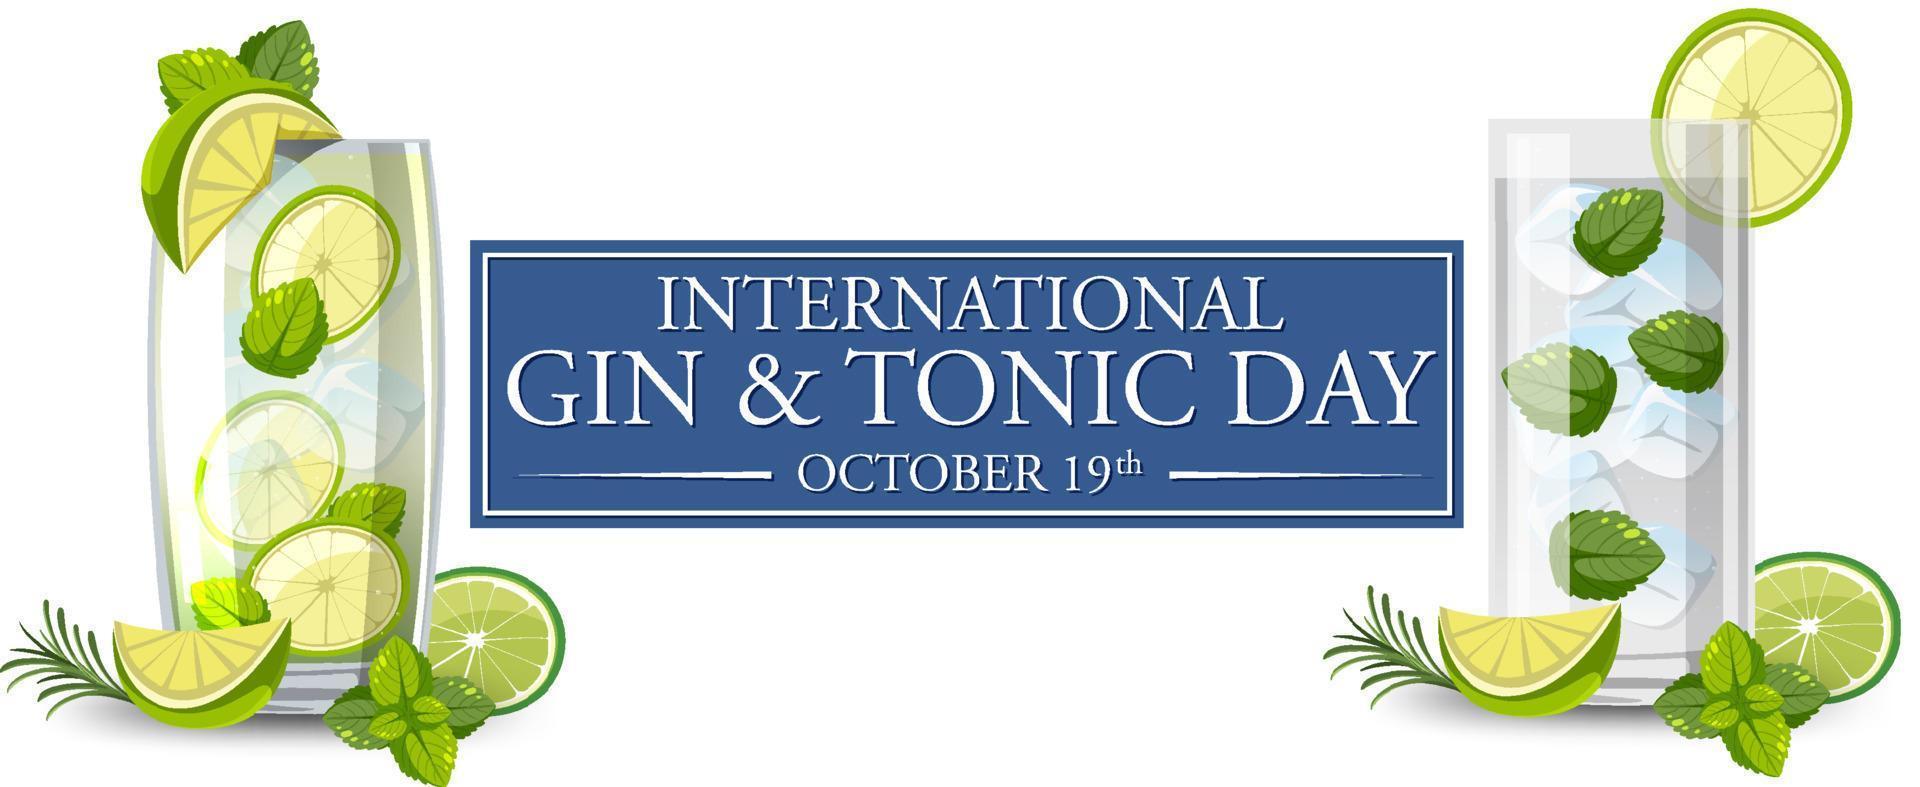 internationale gin-tonic dagbanner vector